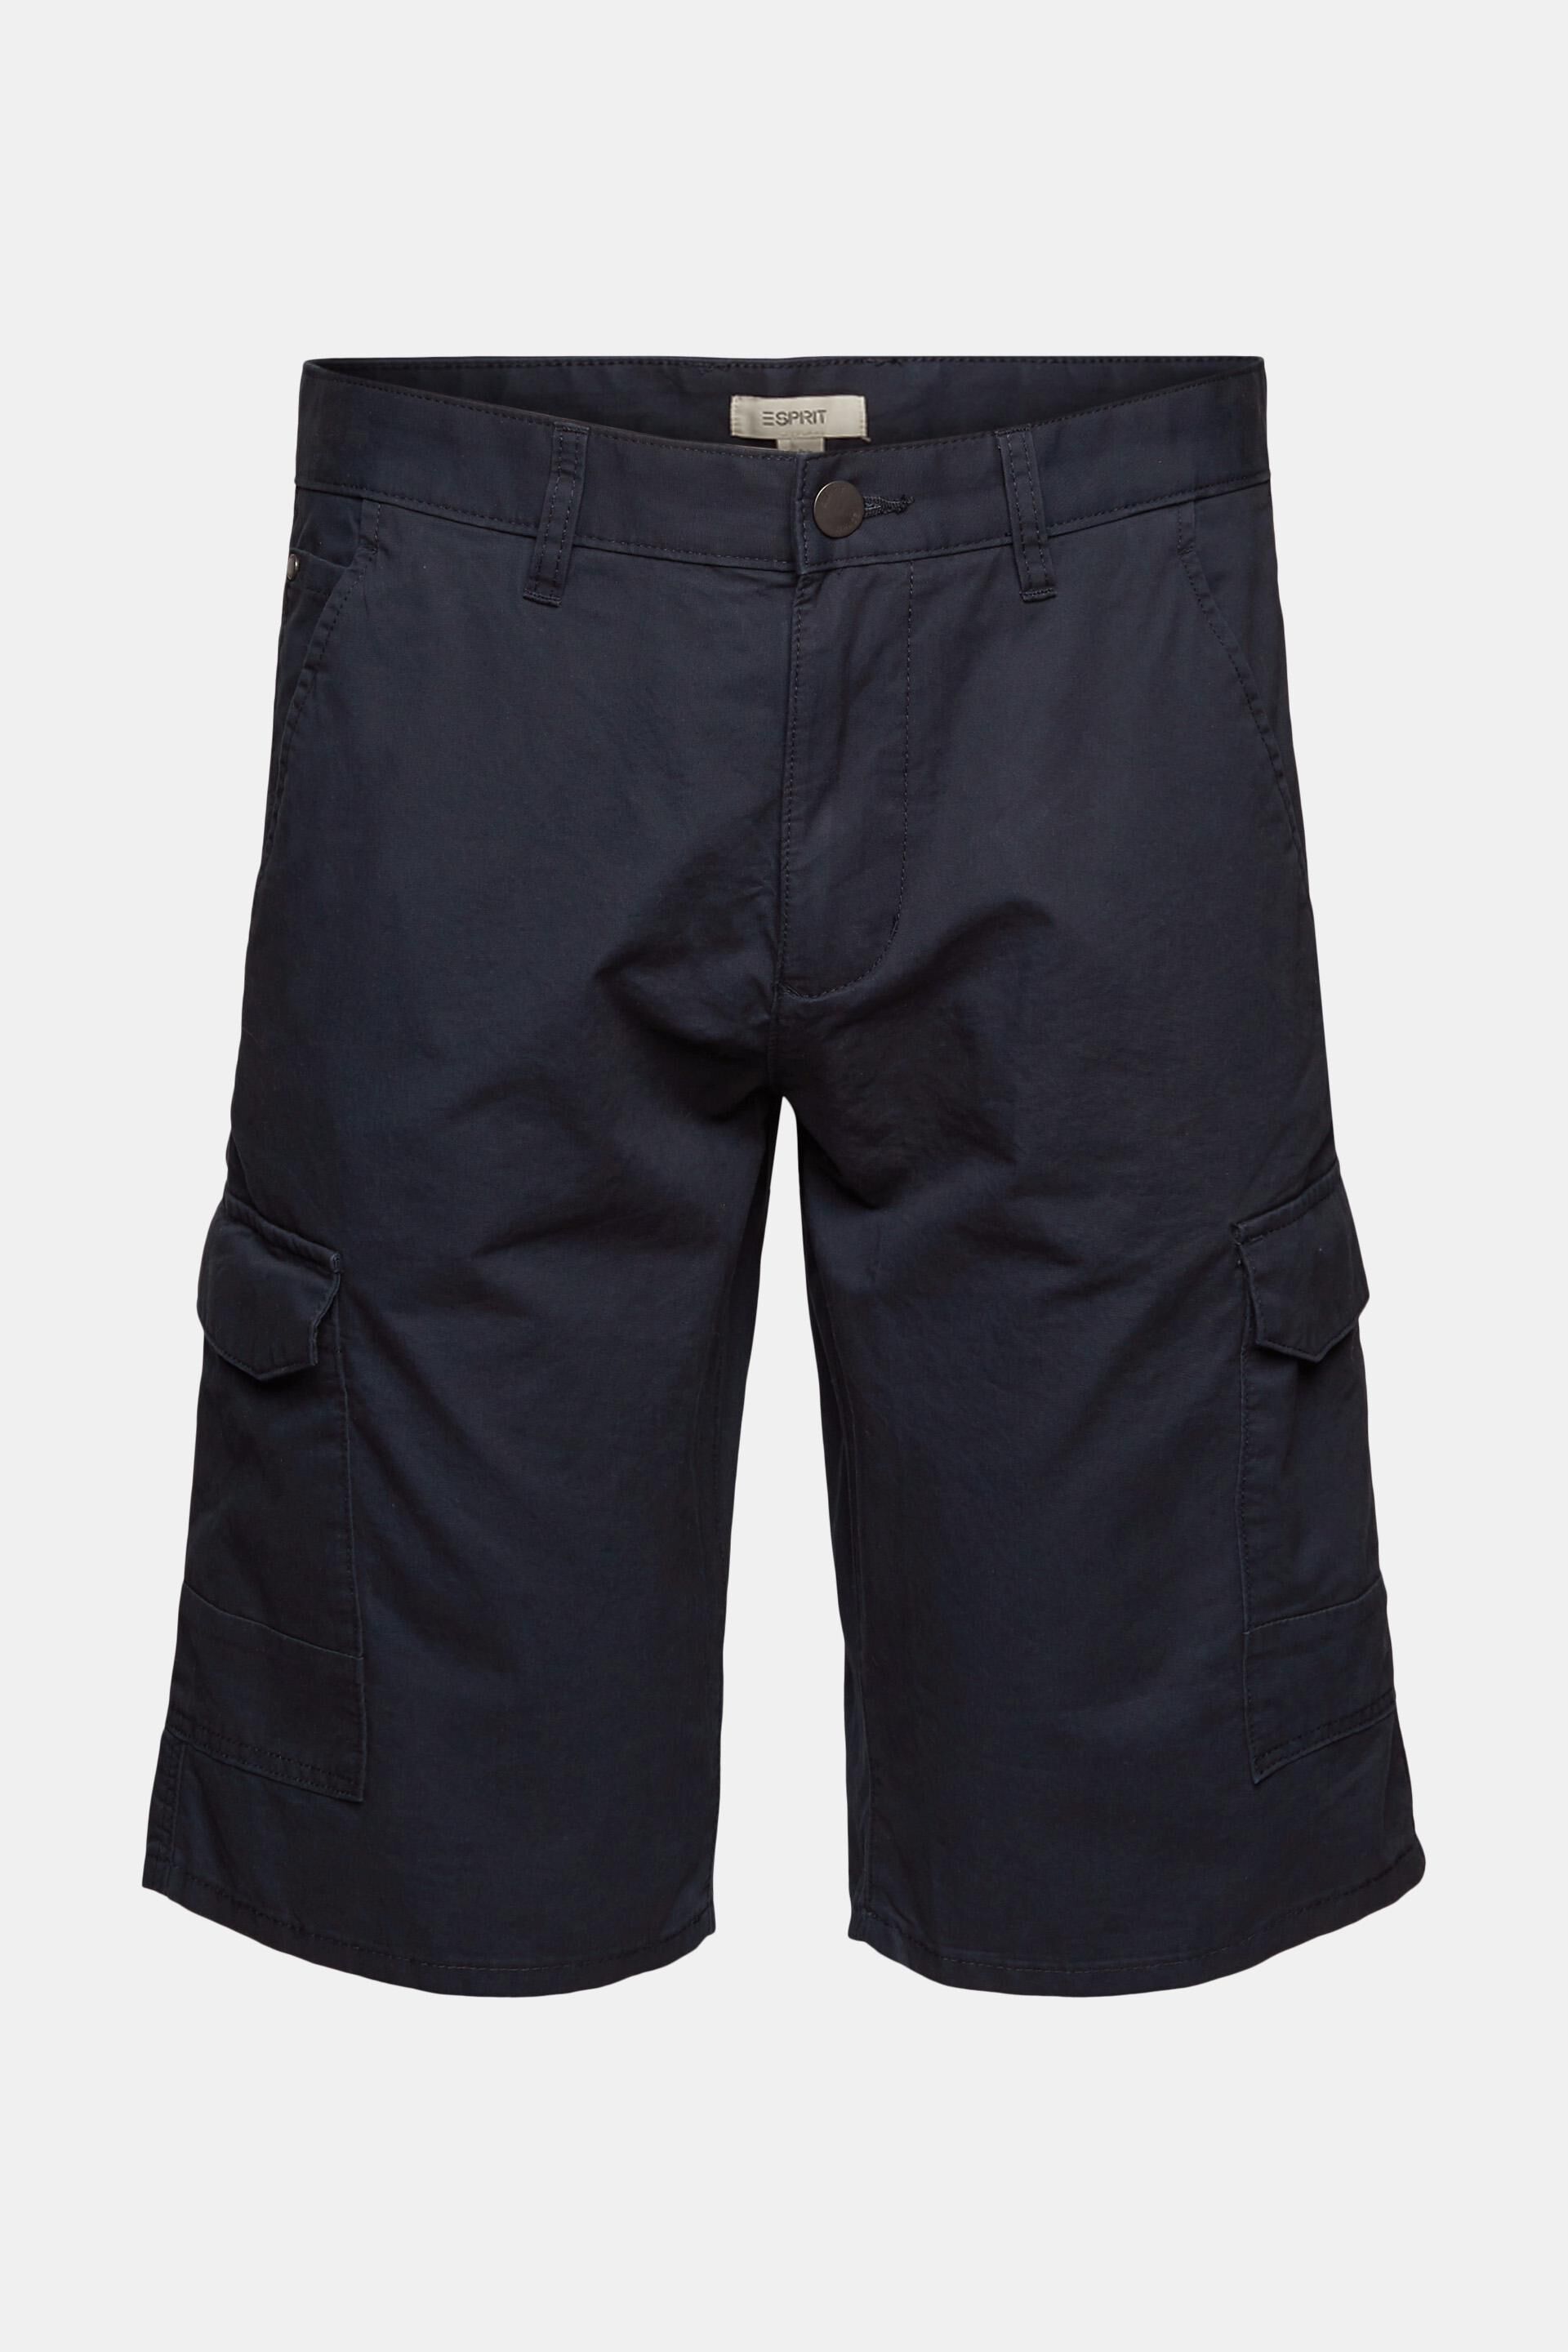 Mens Clothing Shorts Cargo shorts Martine Rose Cotton Animal Print Effect Cargo Shorts in Black for Men 